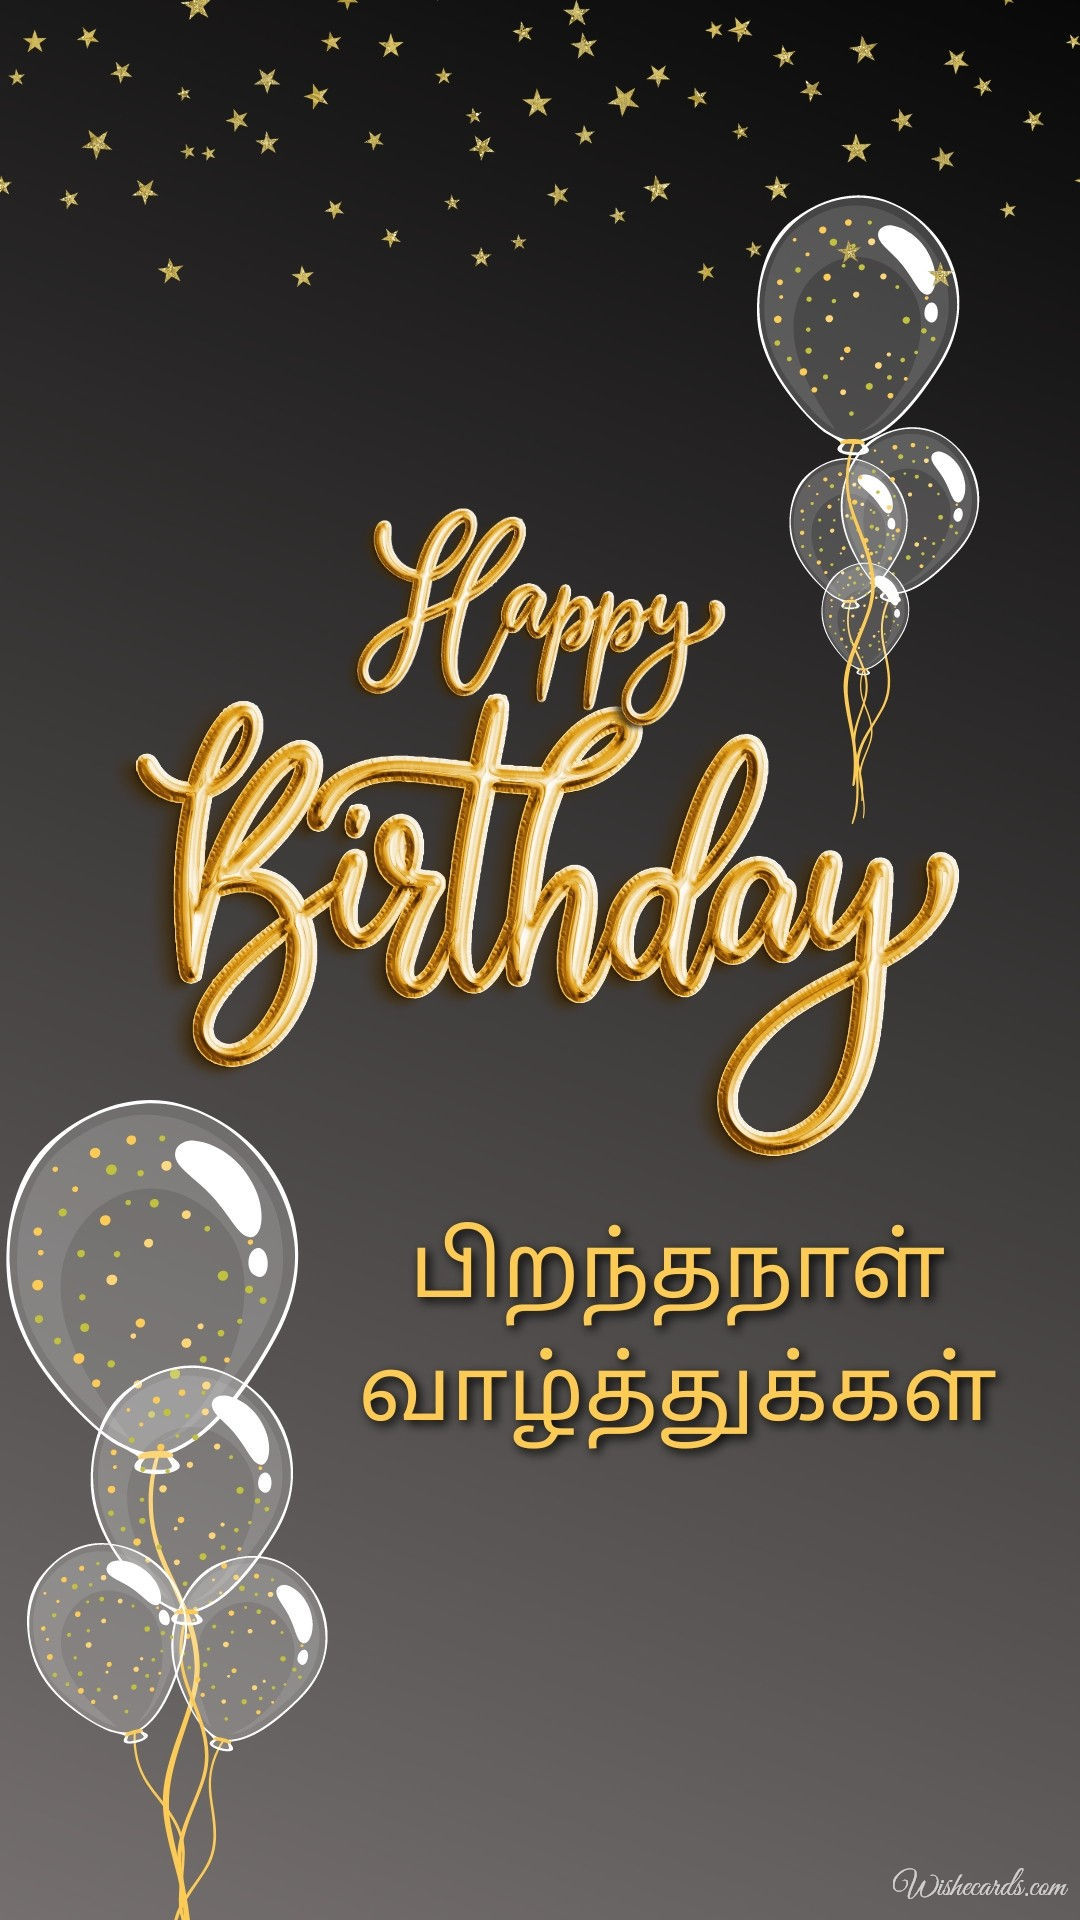 Birthday Image in Tamil